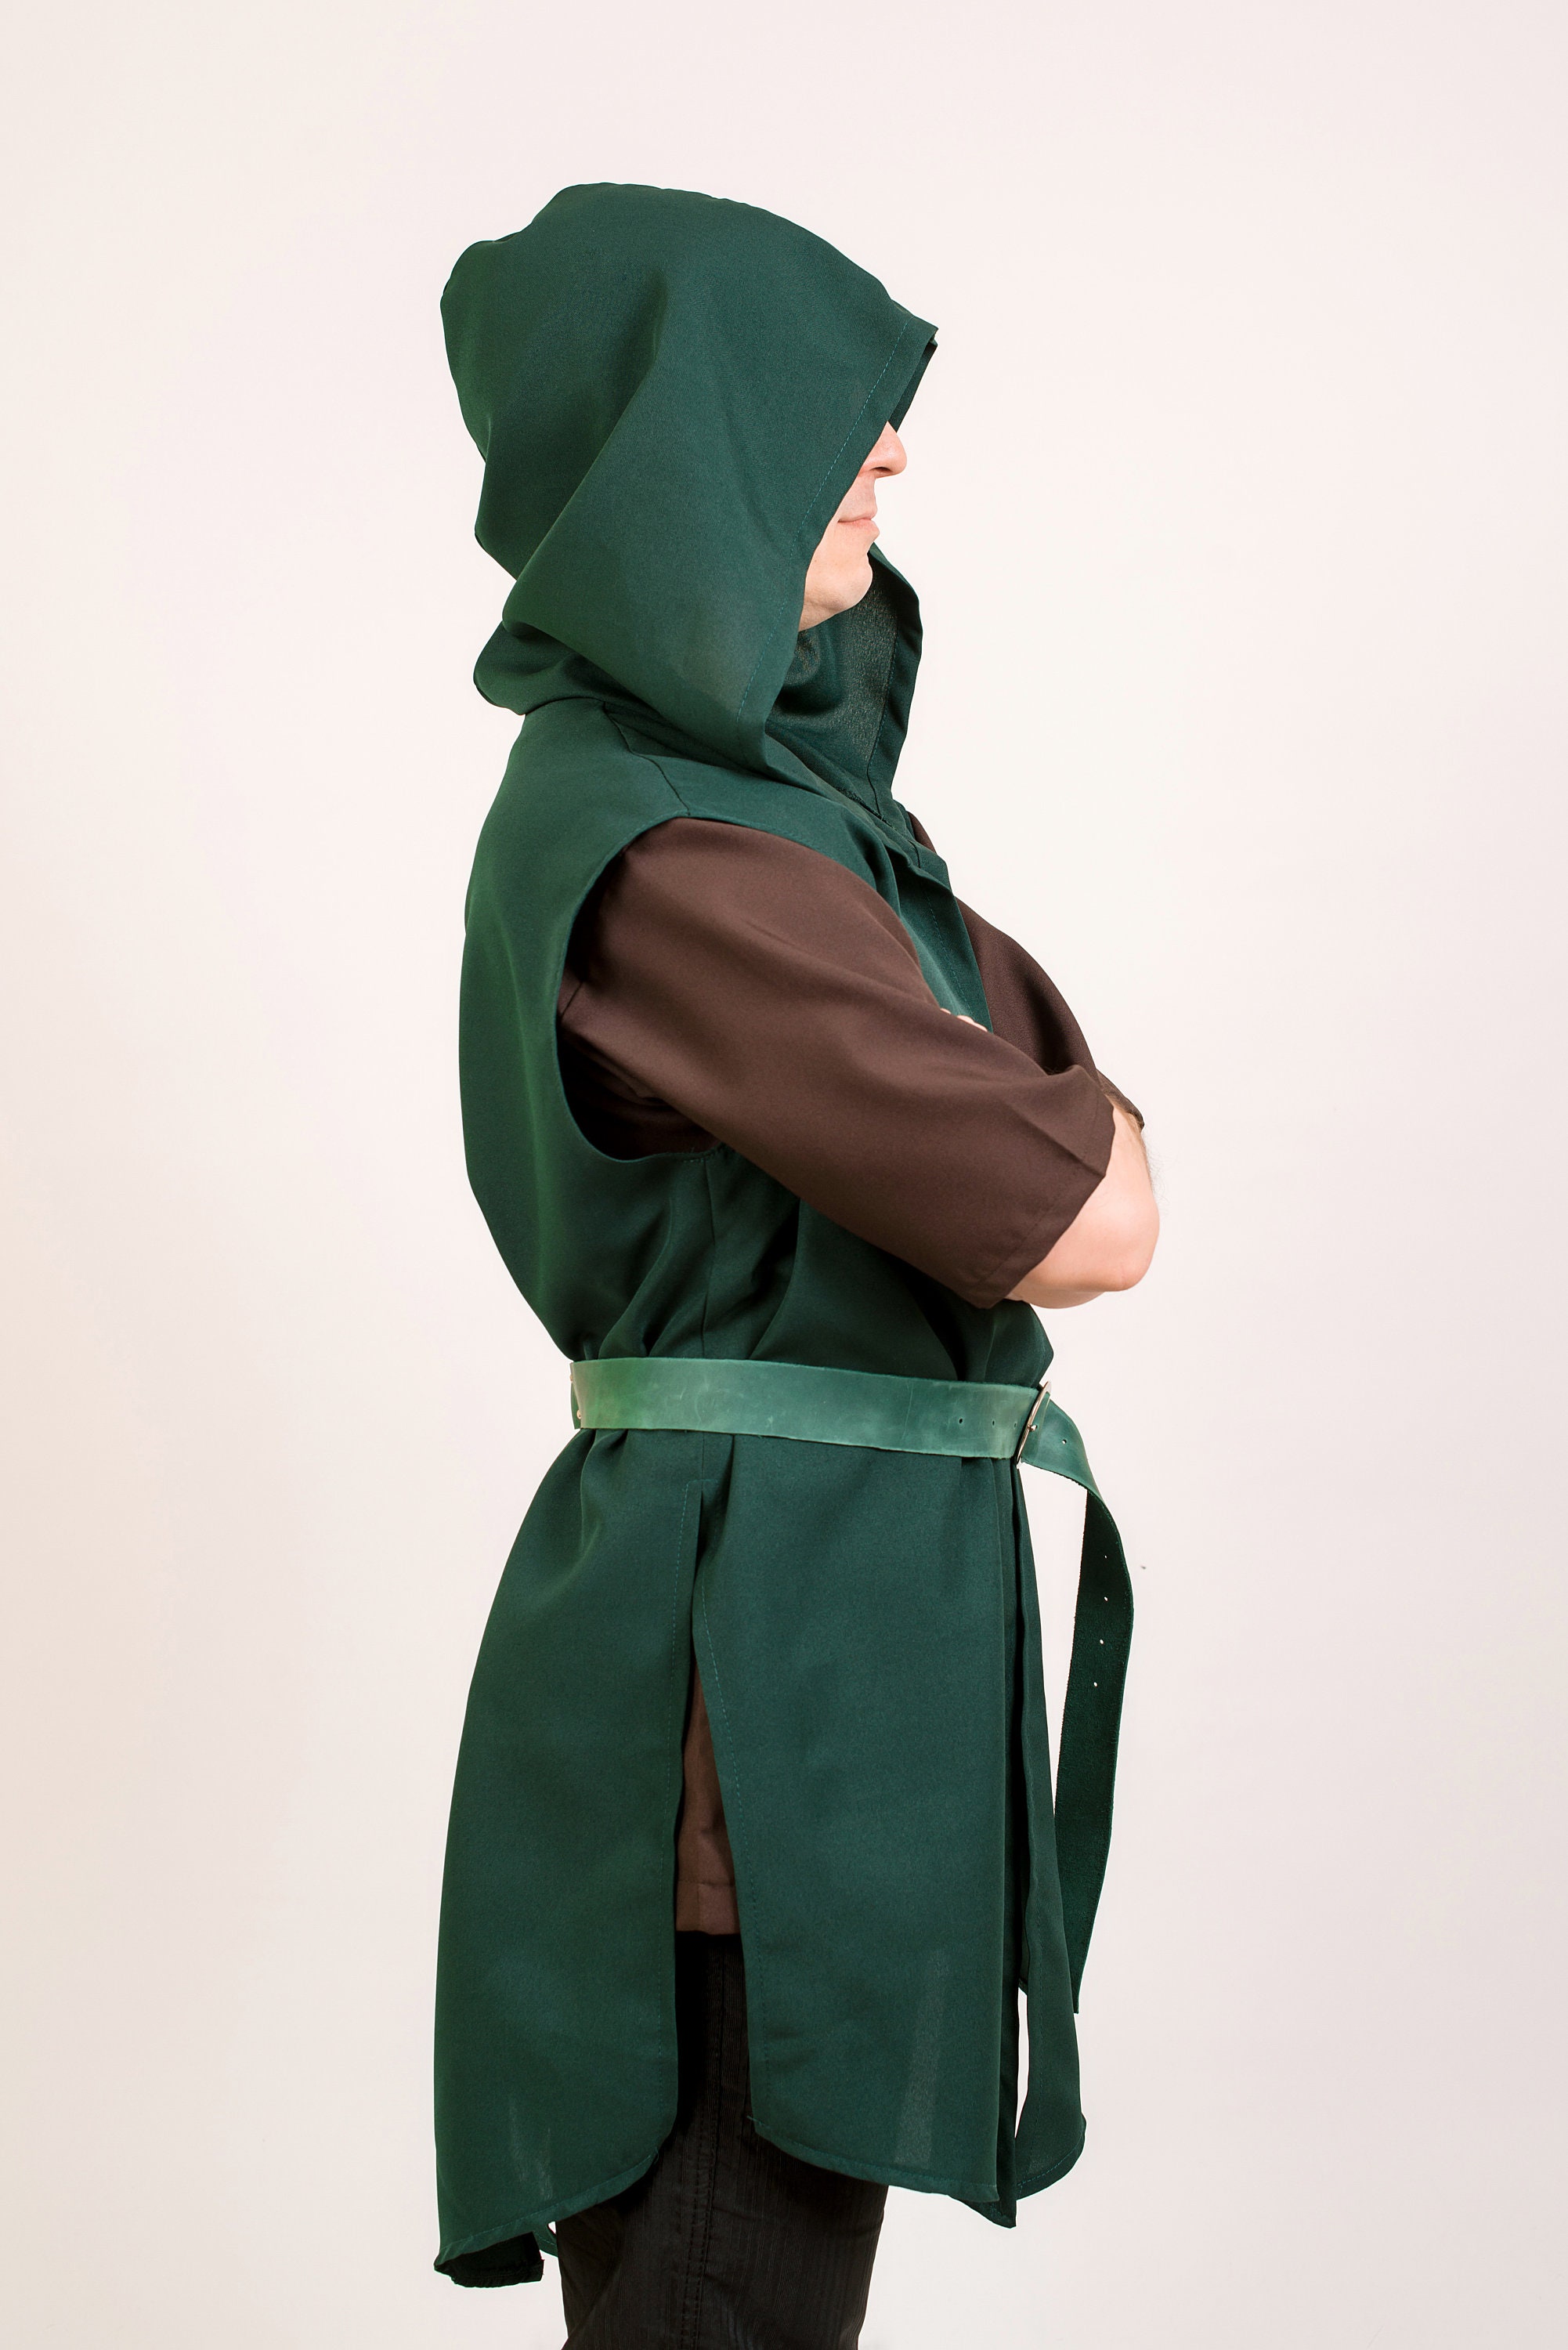 Chaleco medieval mujer verde ⚔️ Tienda-Medieval